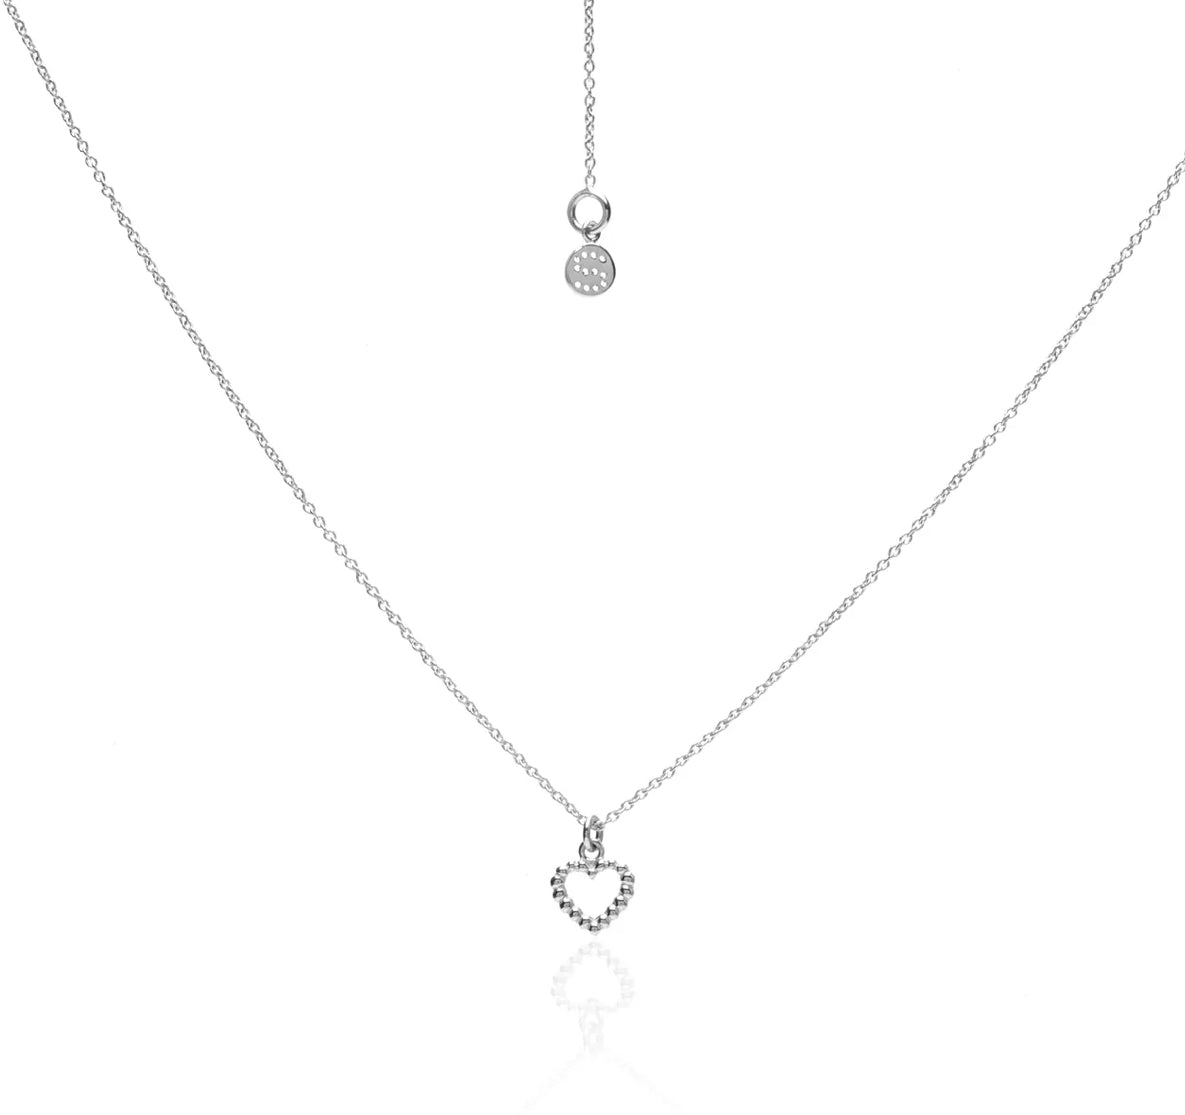 Mini Cutout Heart Necklace - Silver